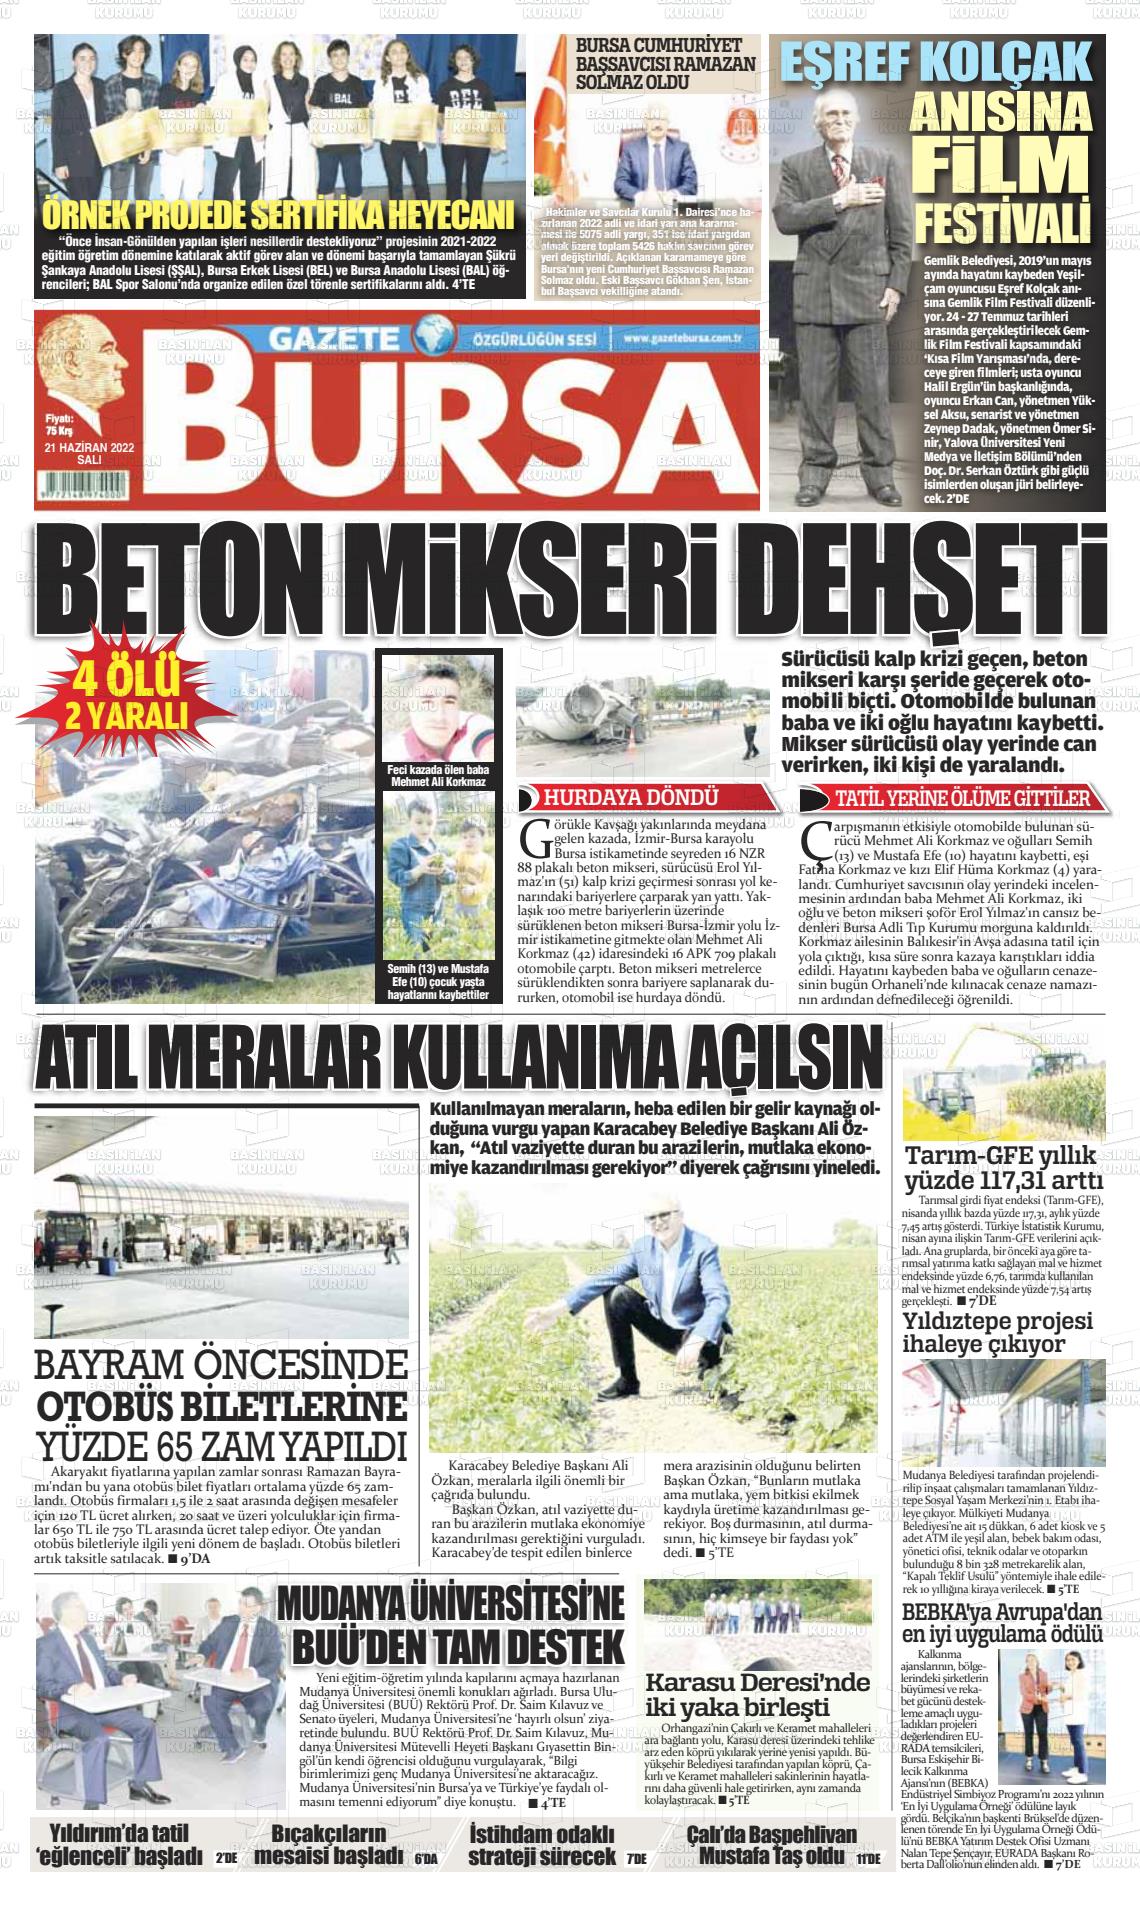 21 Haziran 2022 Gazete Bursa Gazete Manşeti